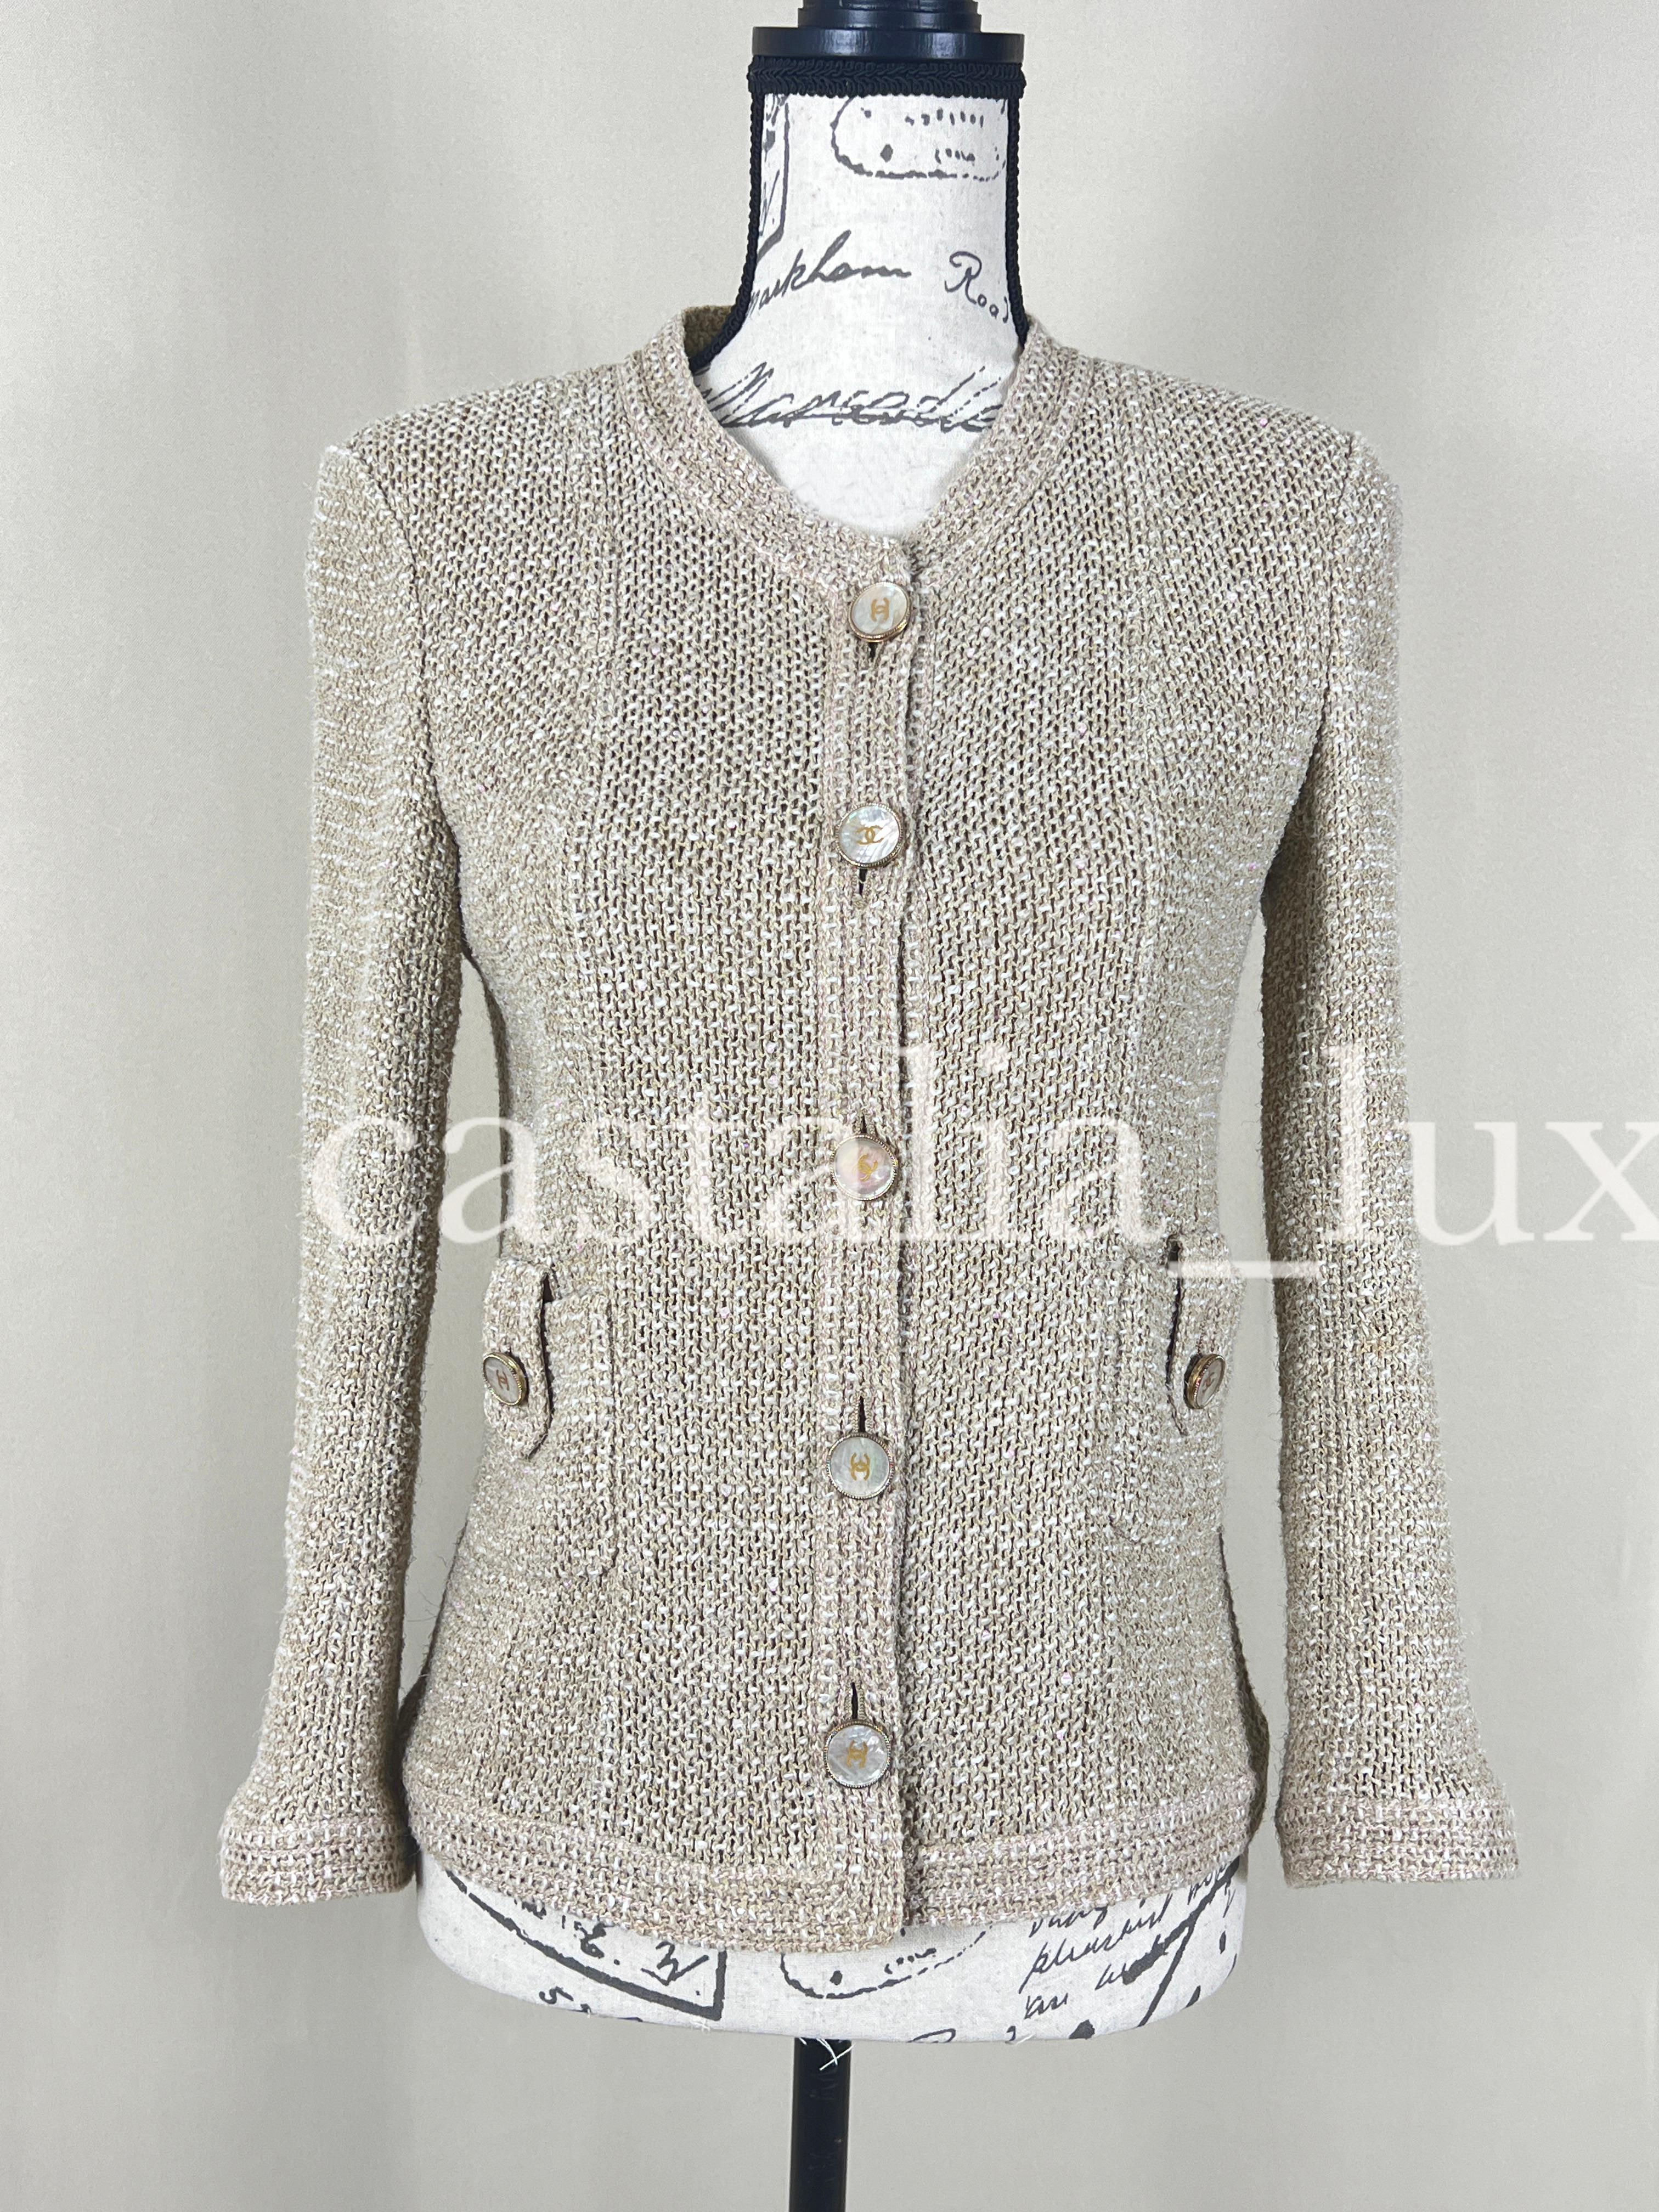 Chanel Iconic Paris / Seoul Beige Tweed Jacket For Sale 1